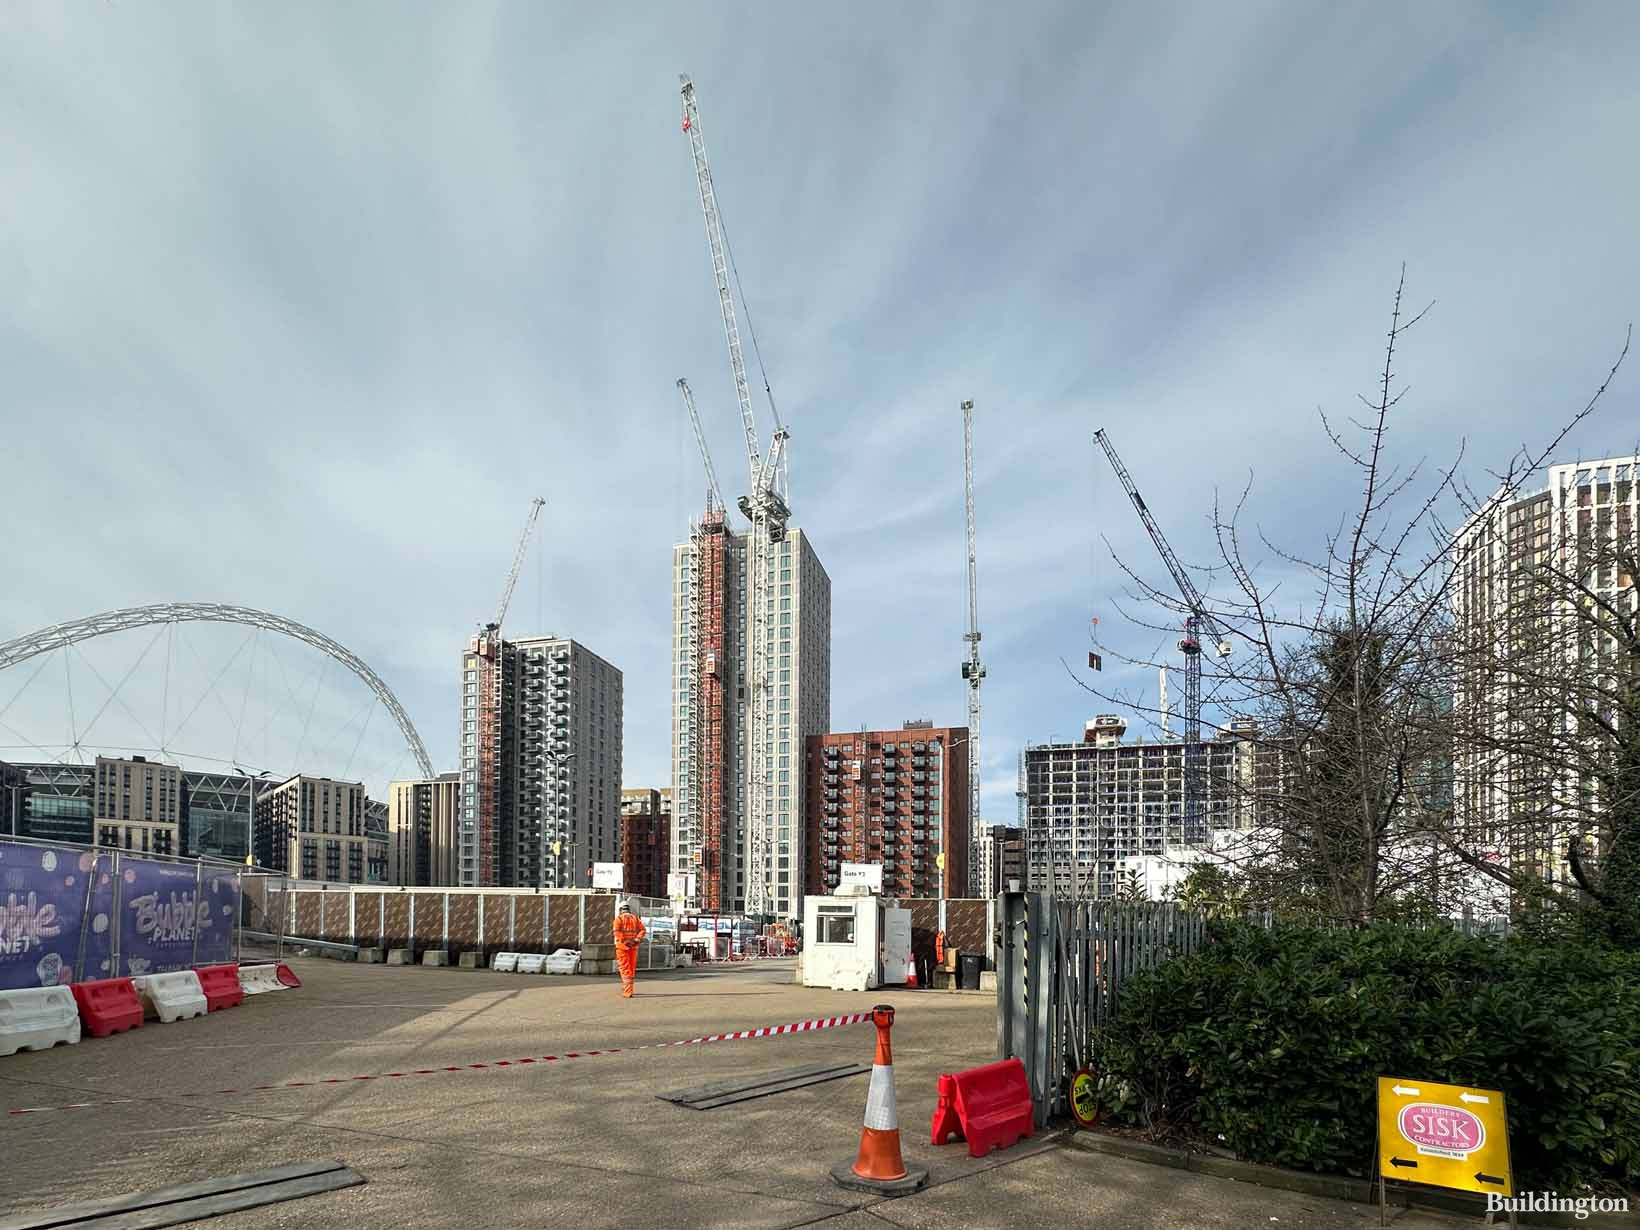 NE02 North East Lands development in Wembley Park, London HA9